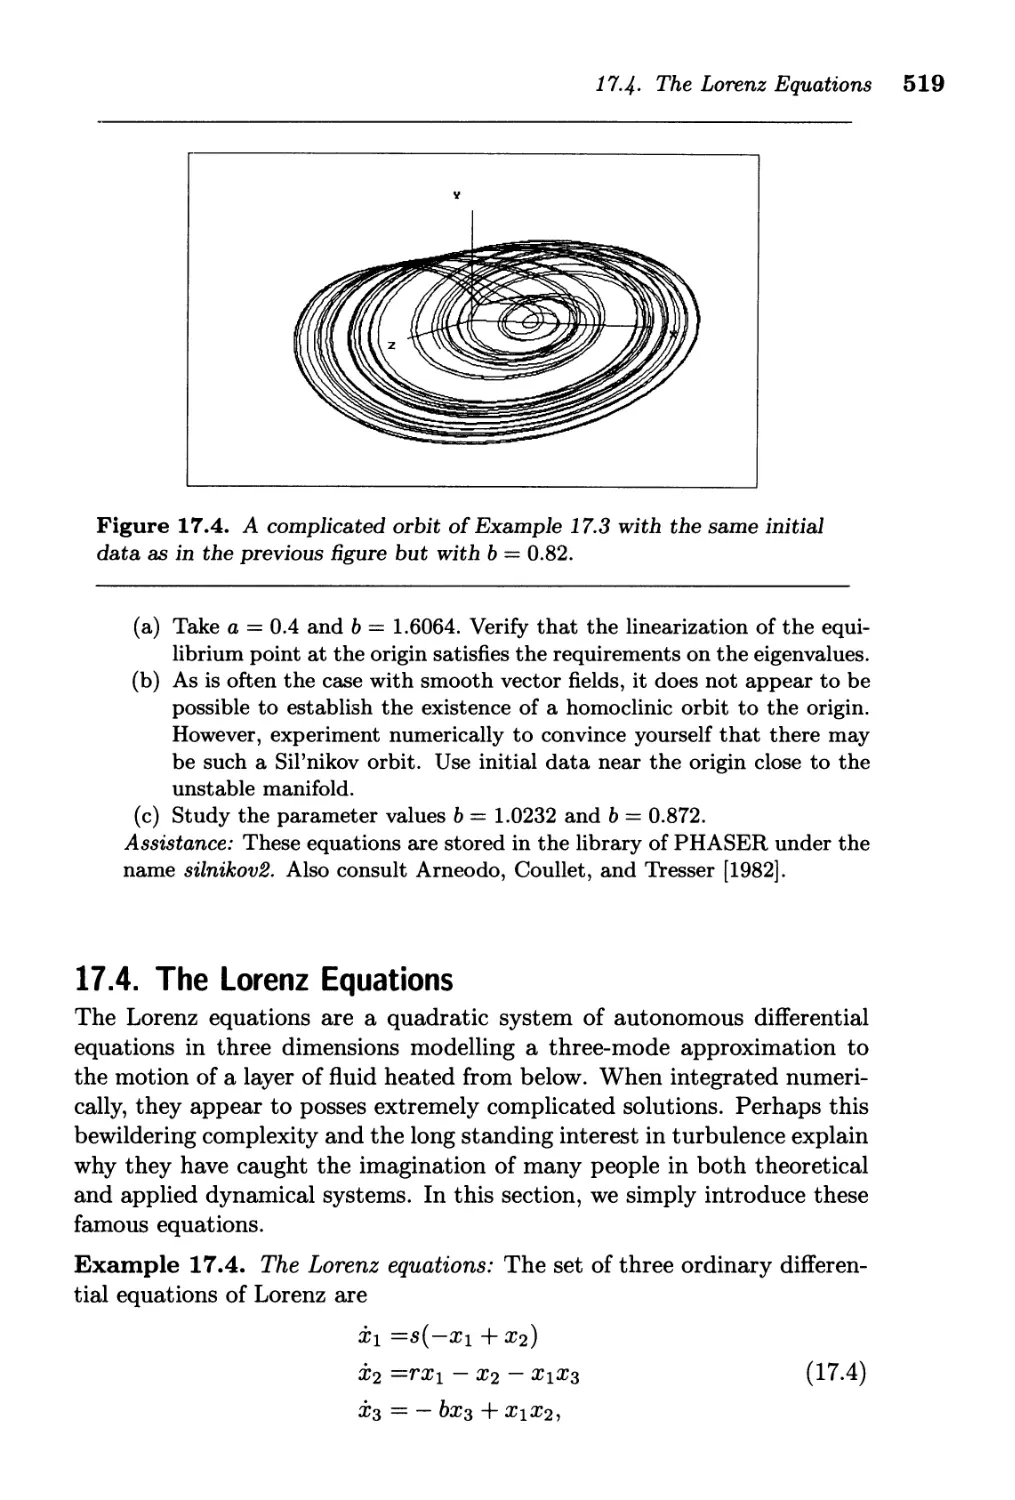 17.4. The Lorenz Equations